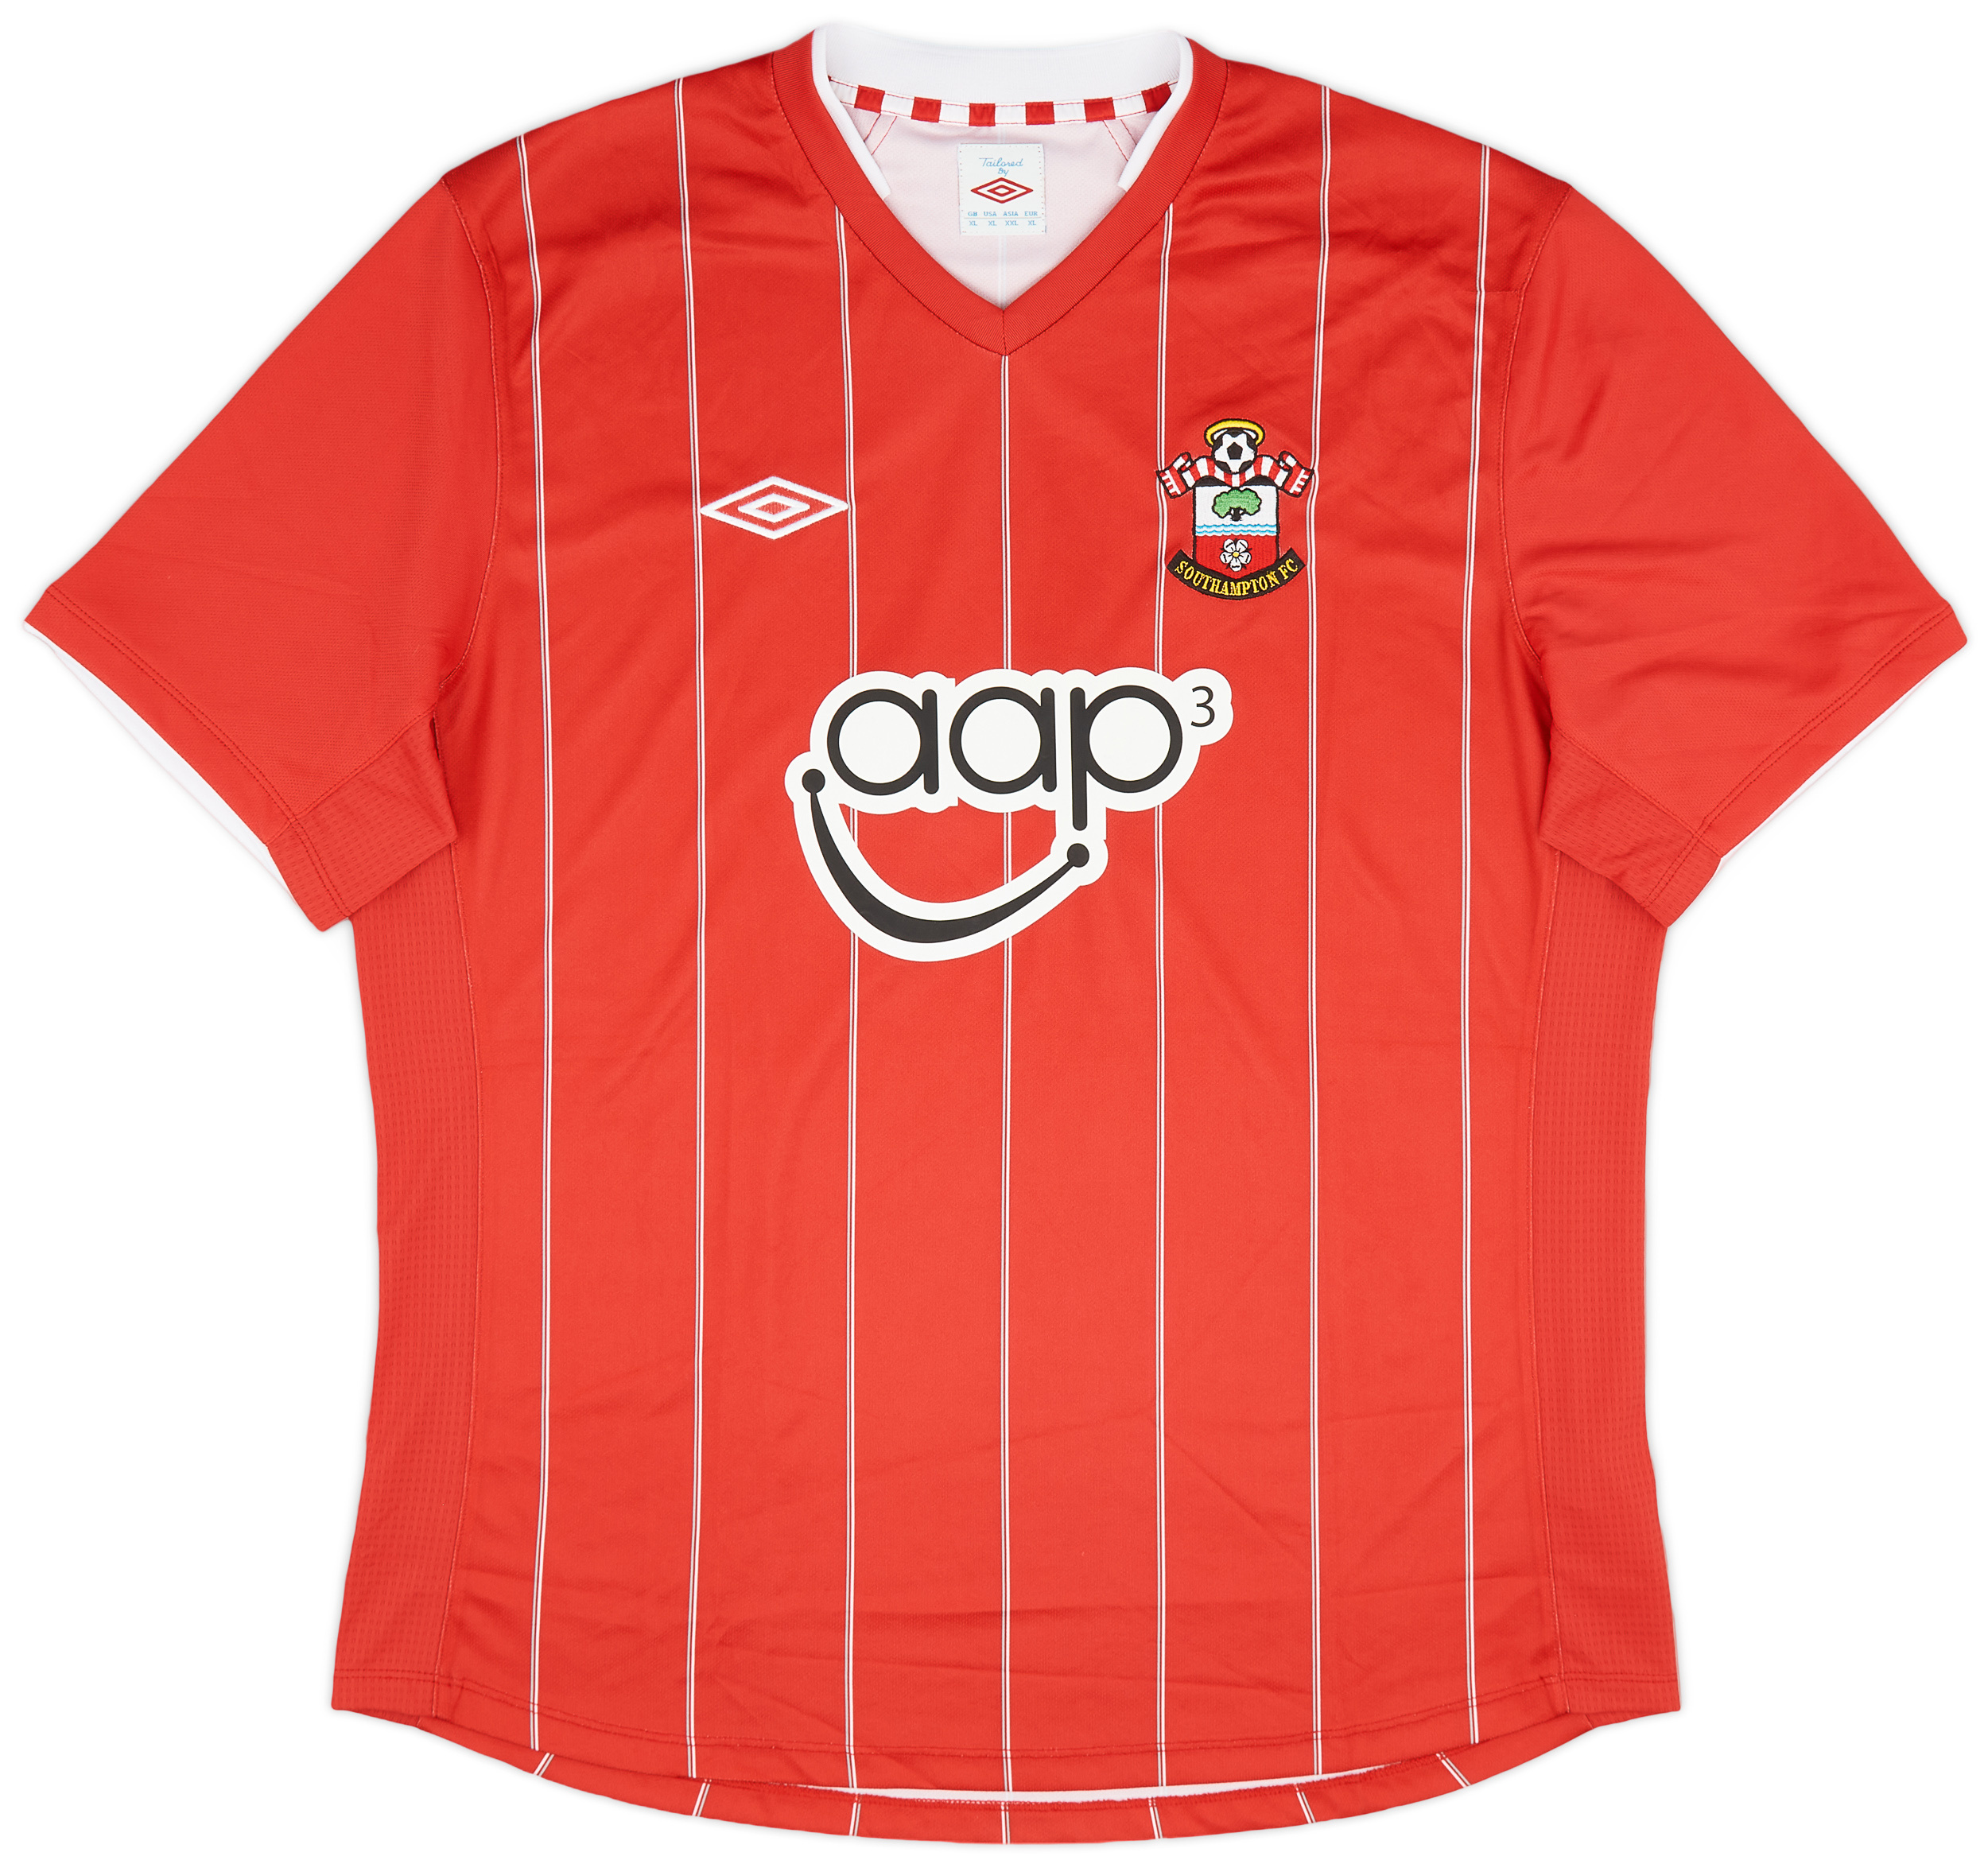 2012-13 Southampton Home Shirt - 9/10 - ()